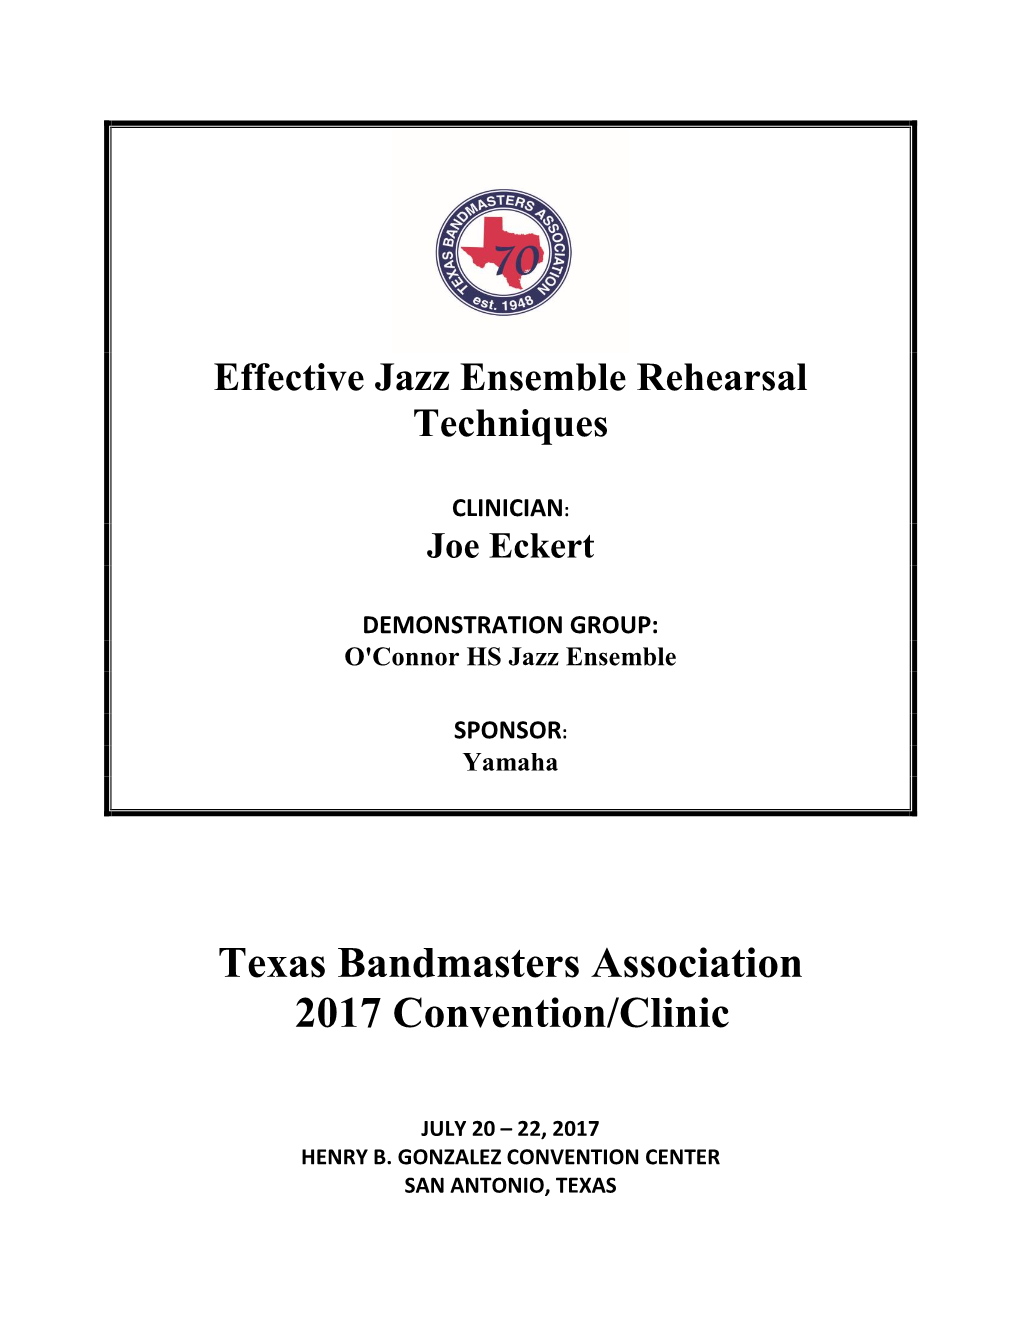 Texas Bandmasters Association 2017 Convention/Clinic